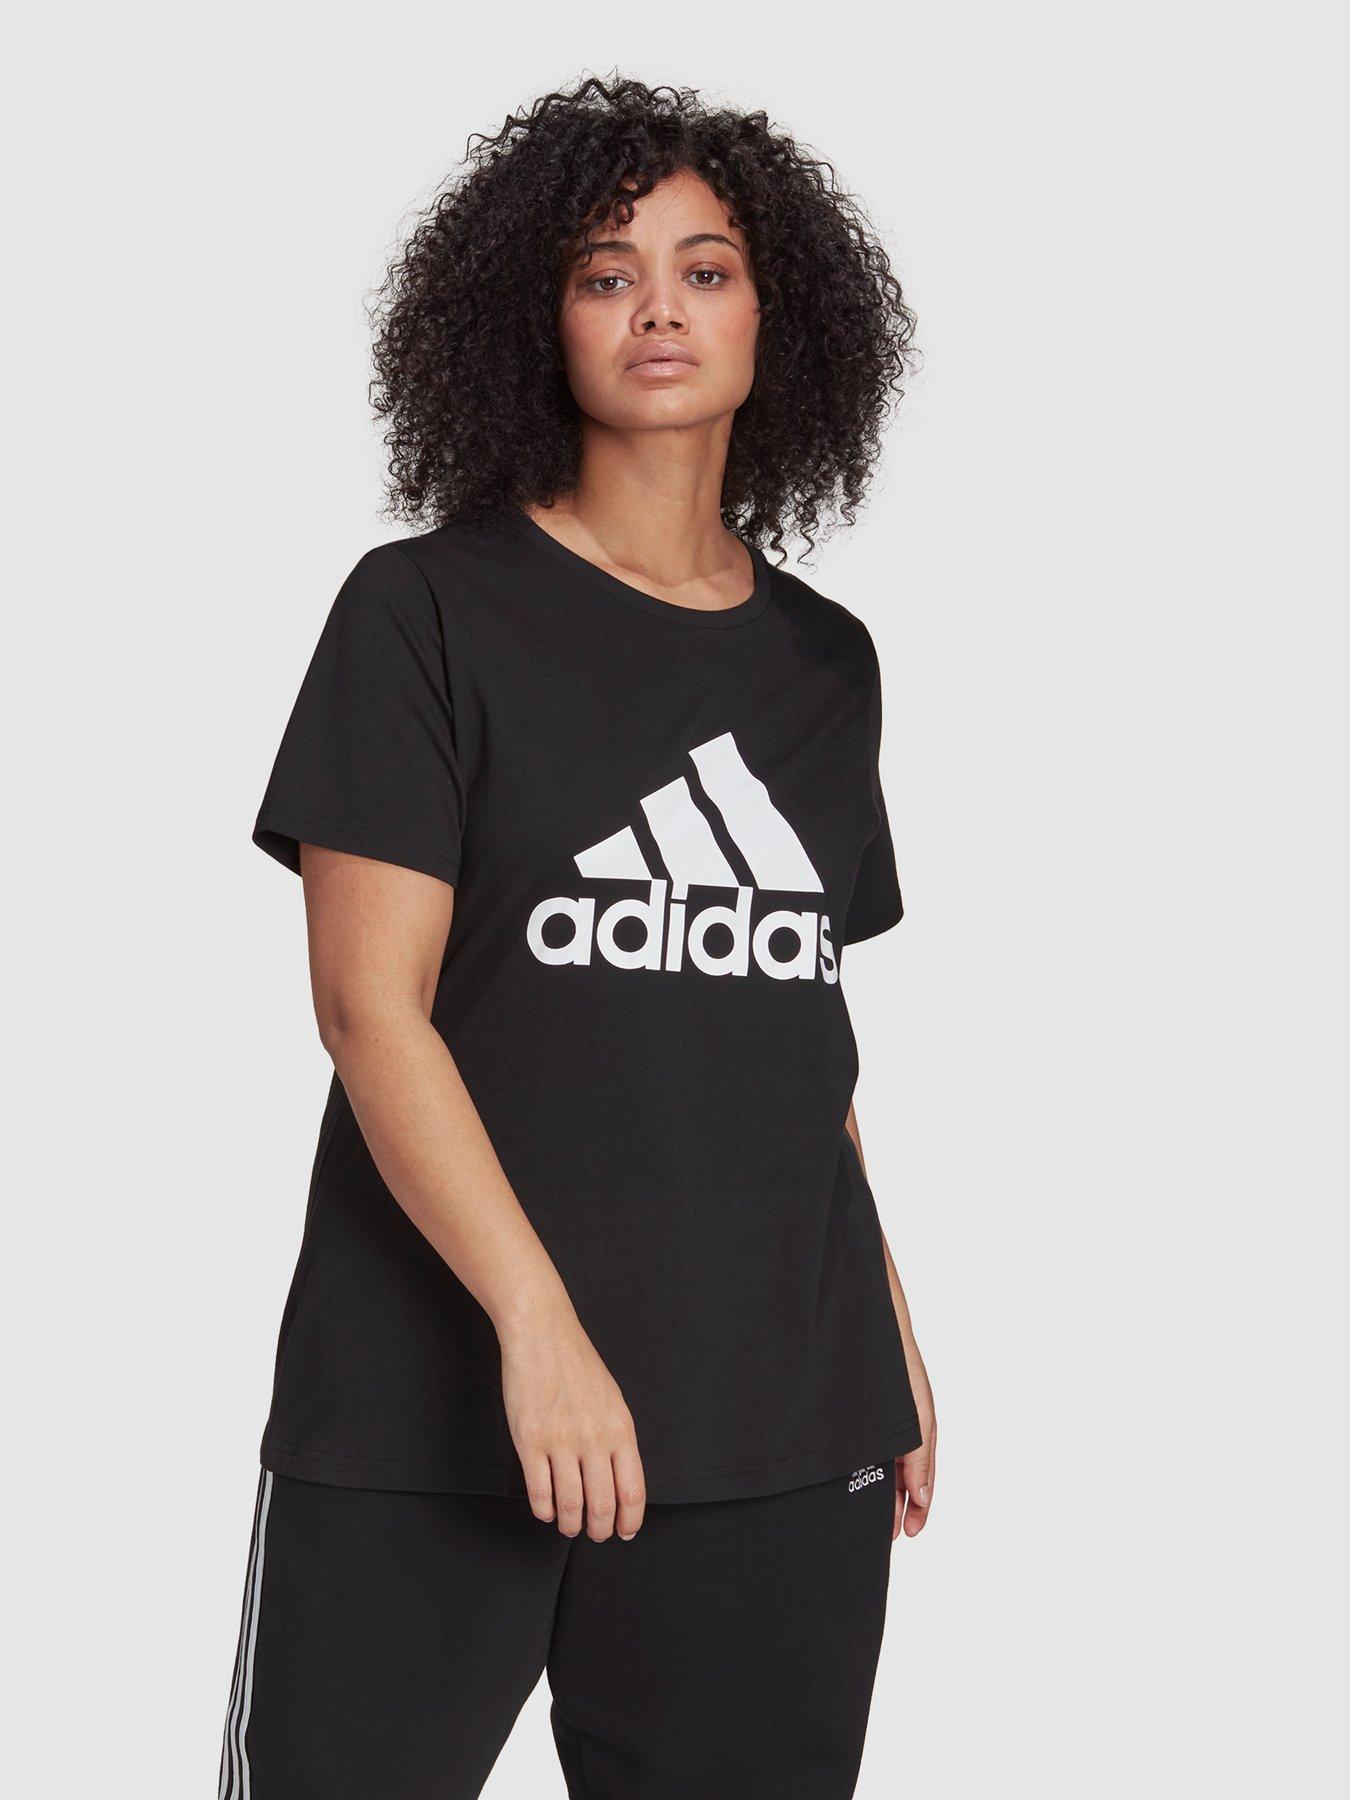 Black | Adidas sportswear | Tops & t-shirts | Women | Very Ireland | Sport-T-Shirts